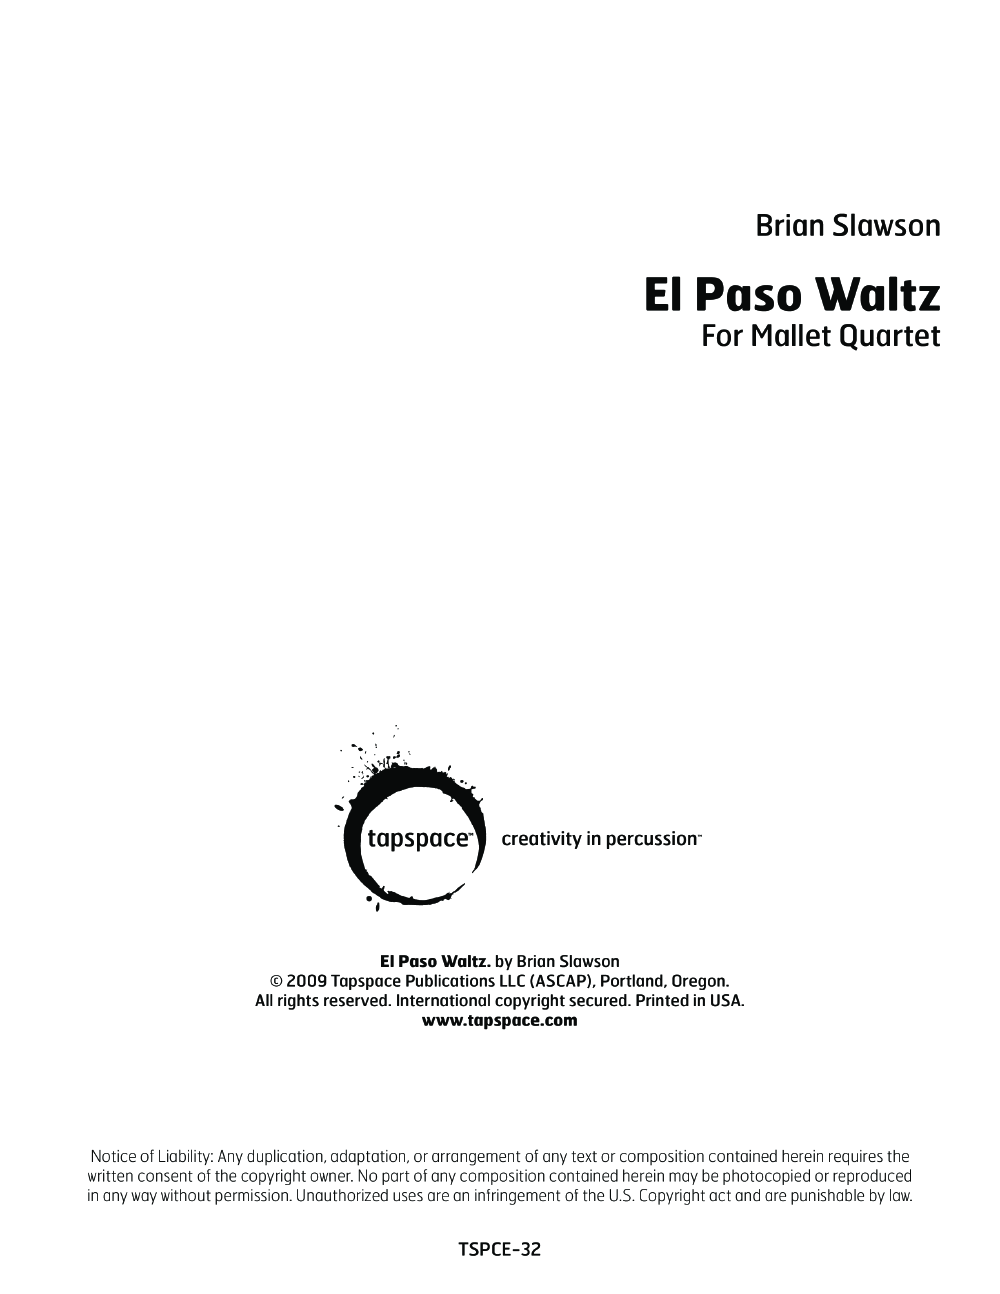 El Paso Waltz Mallet Quartet